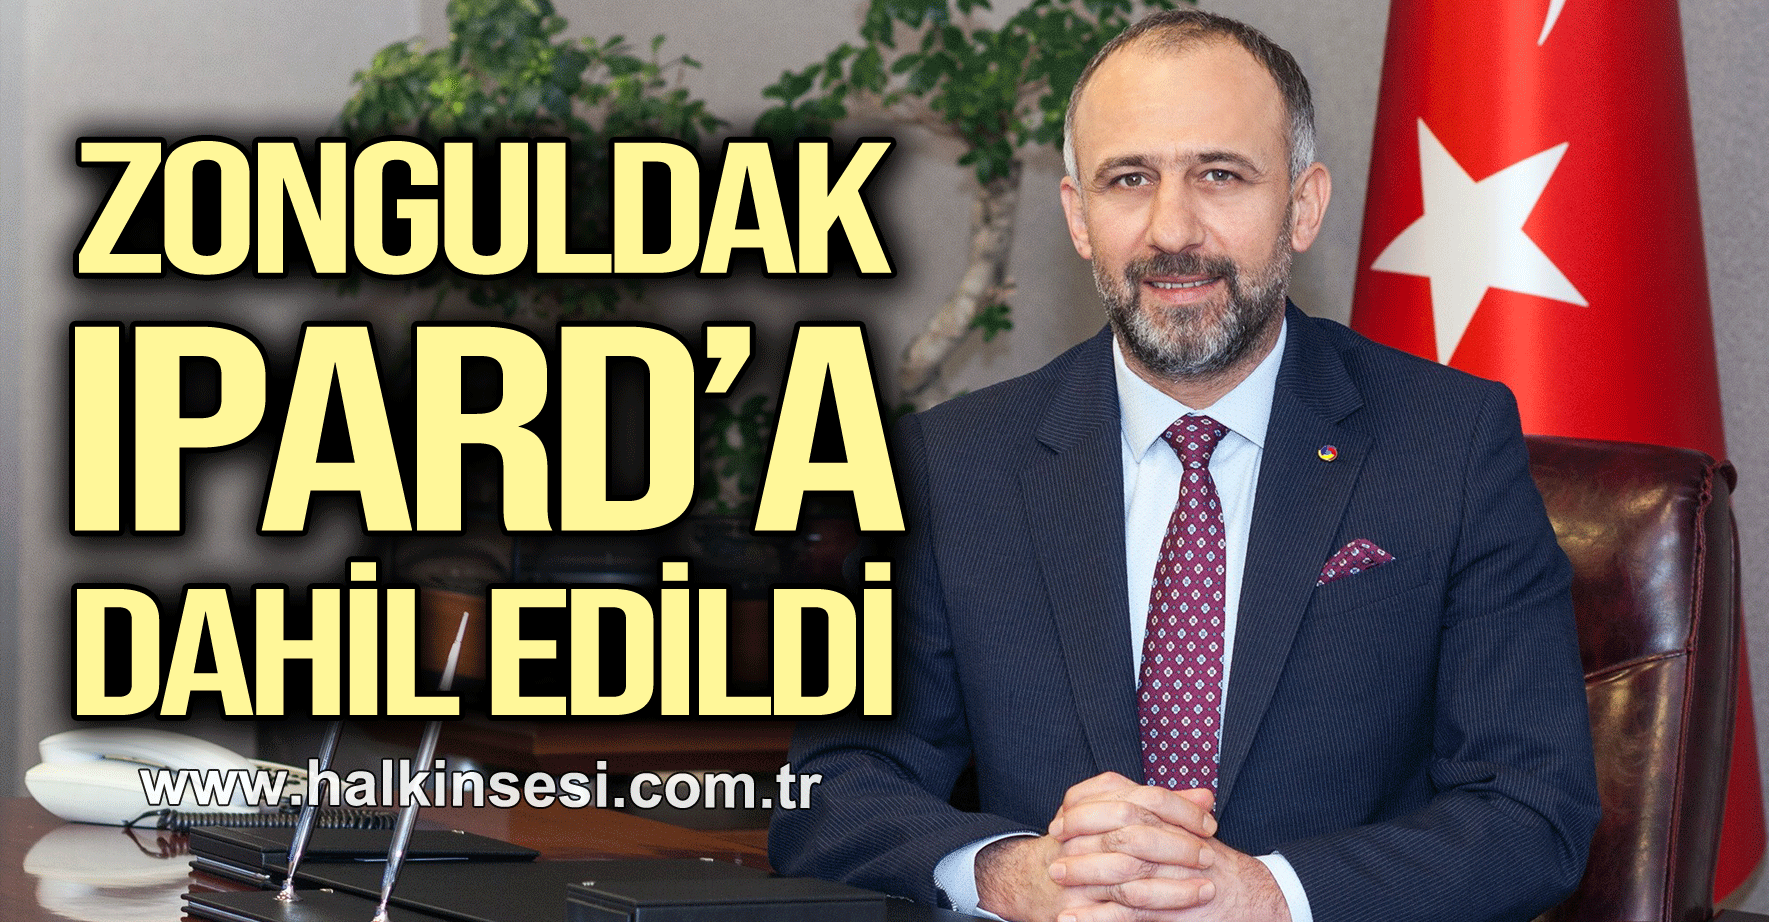 Zonguldak IPARD’a dahil edildi